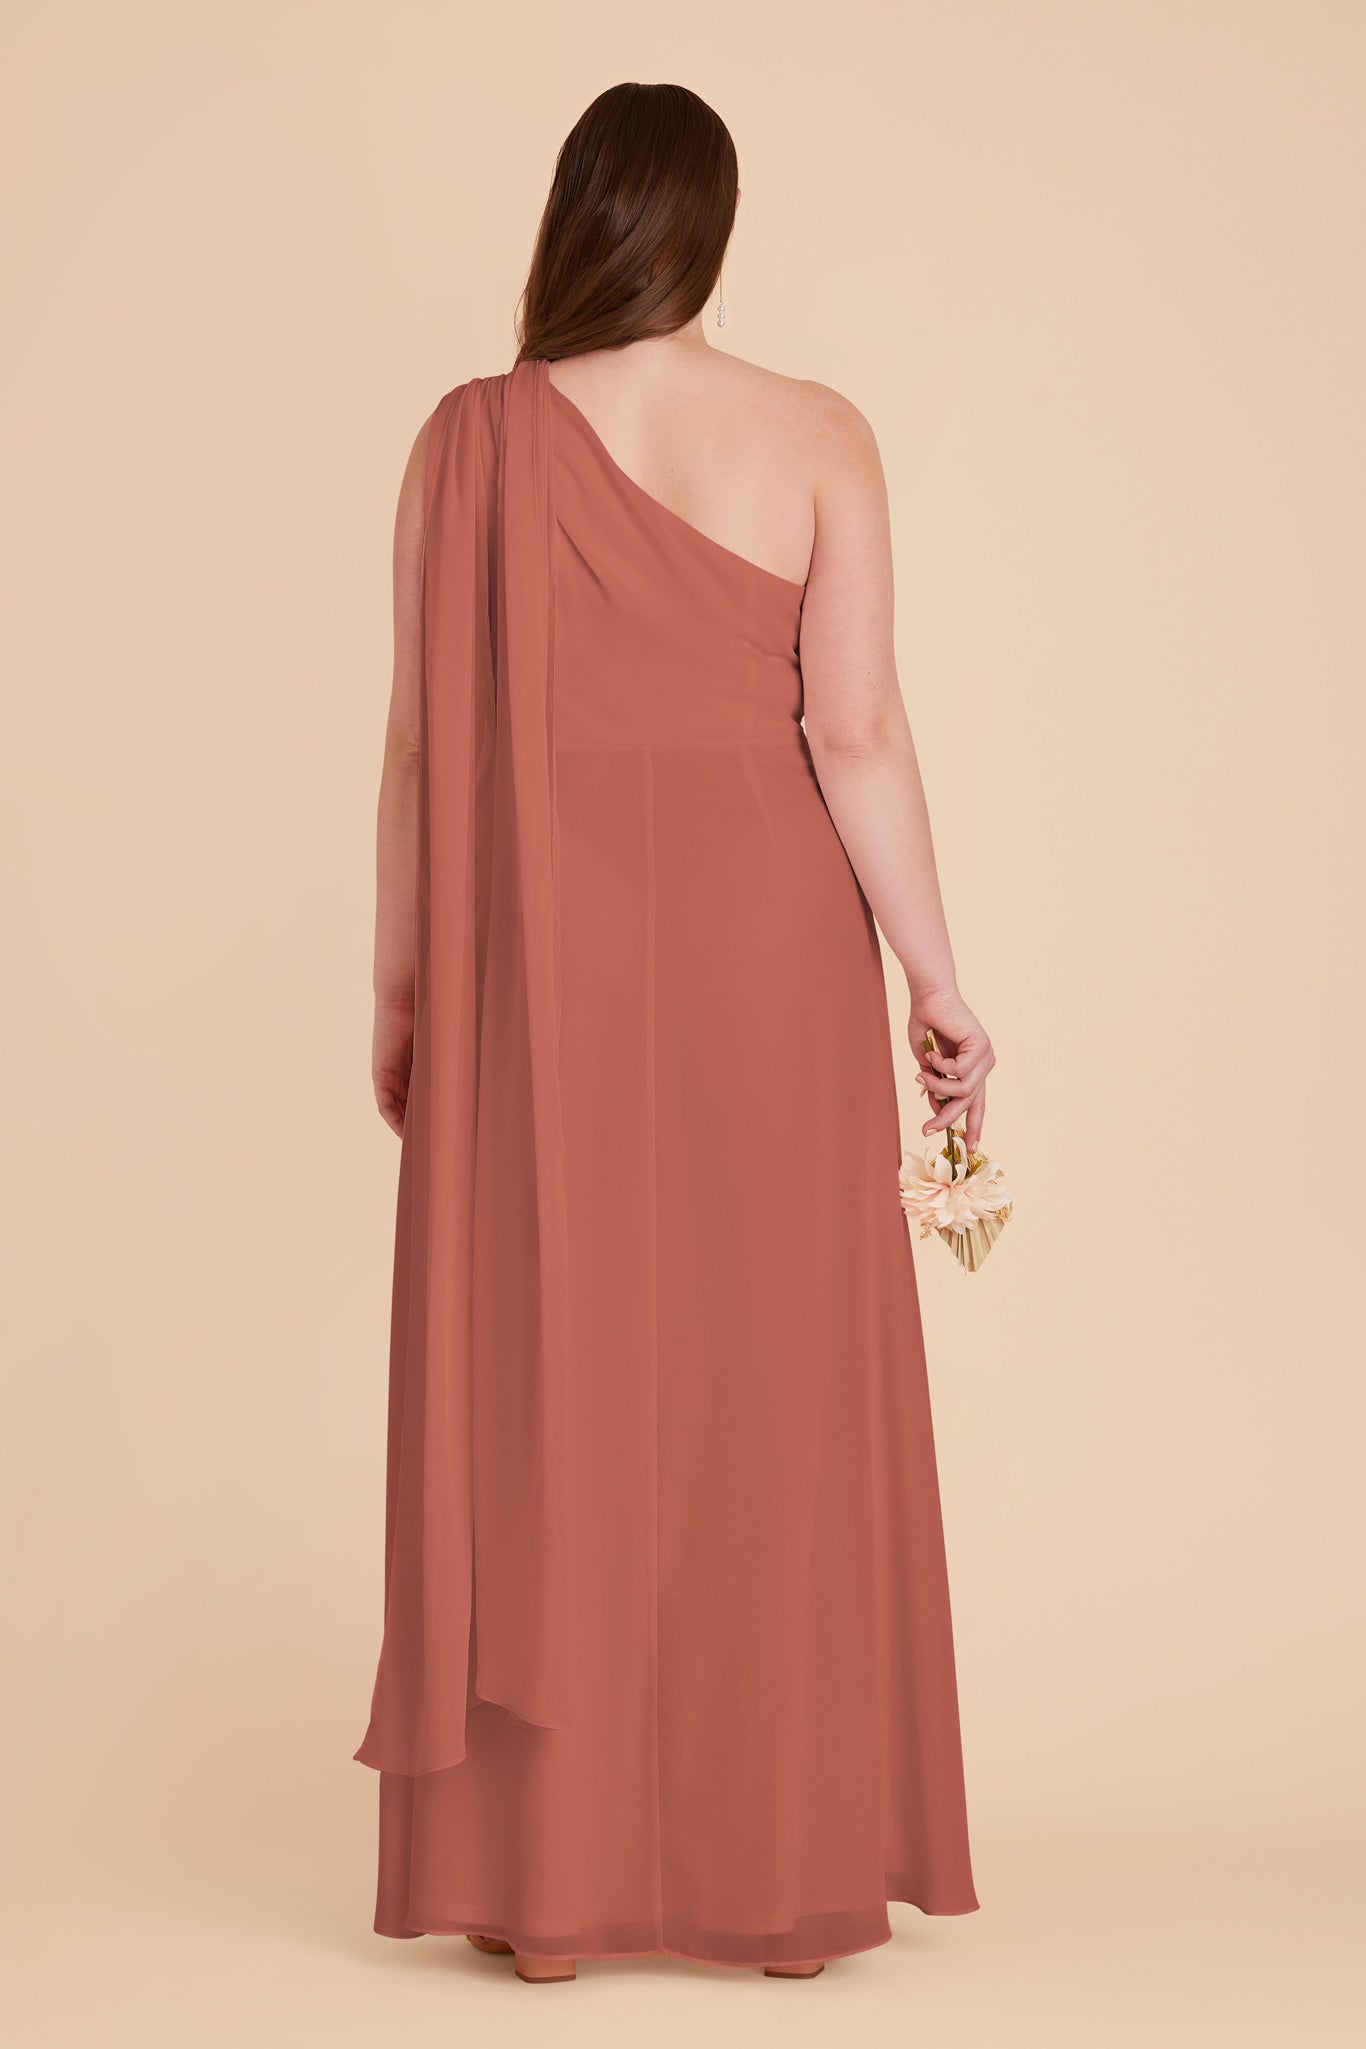 Desert Rose Melissa Chiffon Dress by Birdy Grey